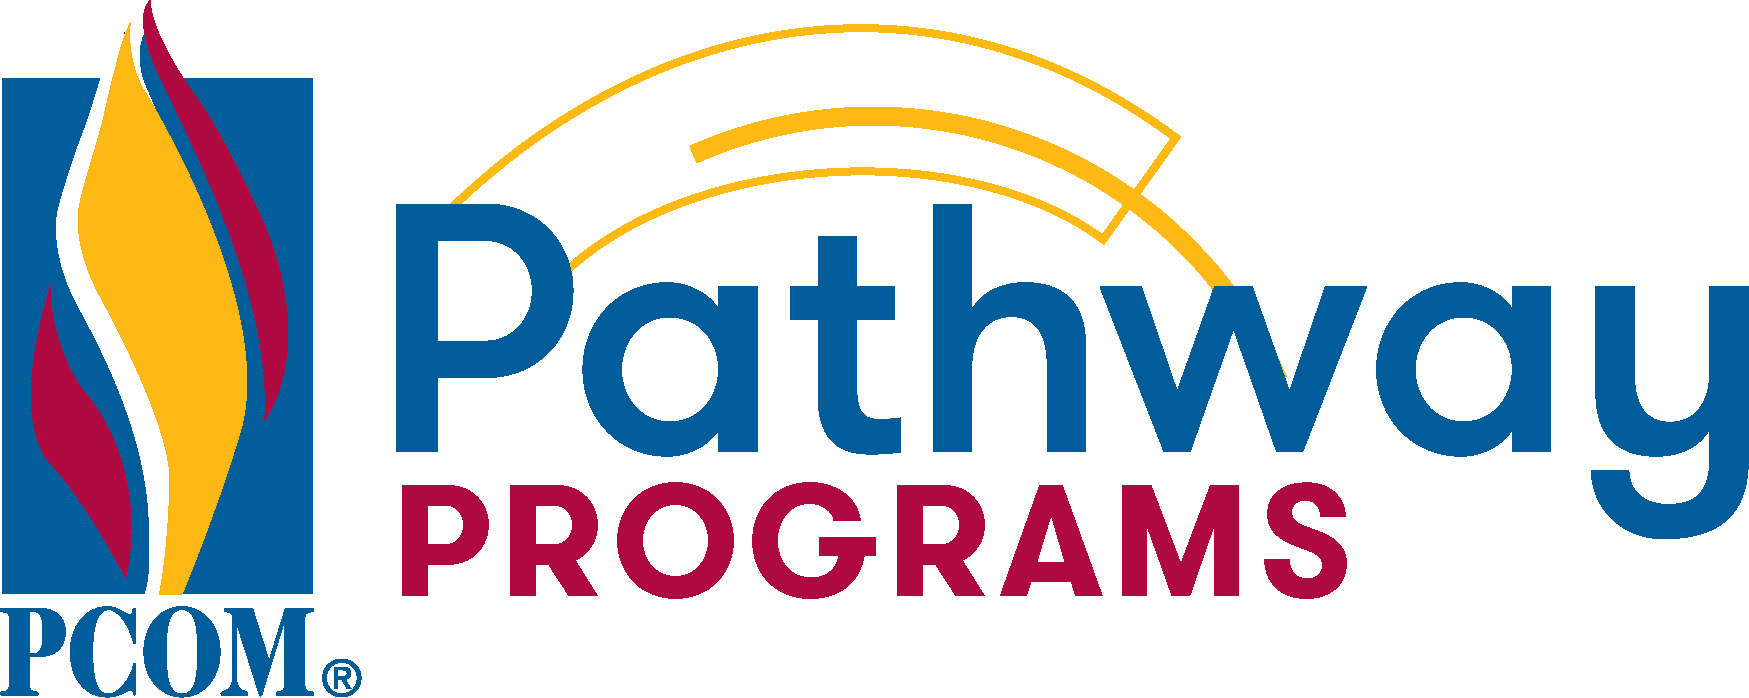 PCOM Pathways Program logo with PCOM flame logo and vector artwork elements